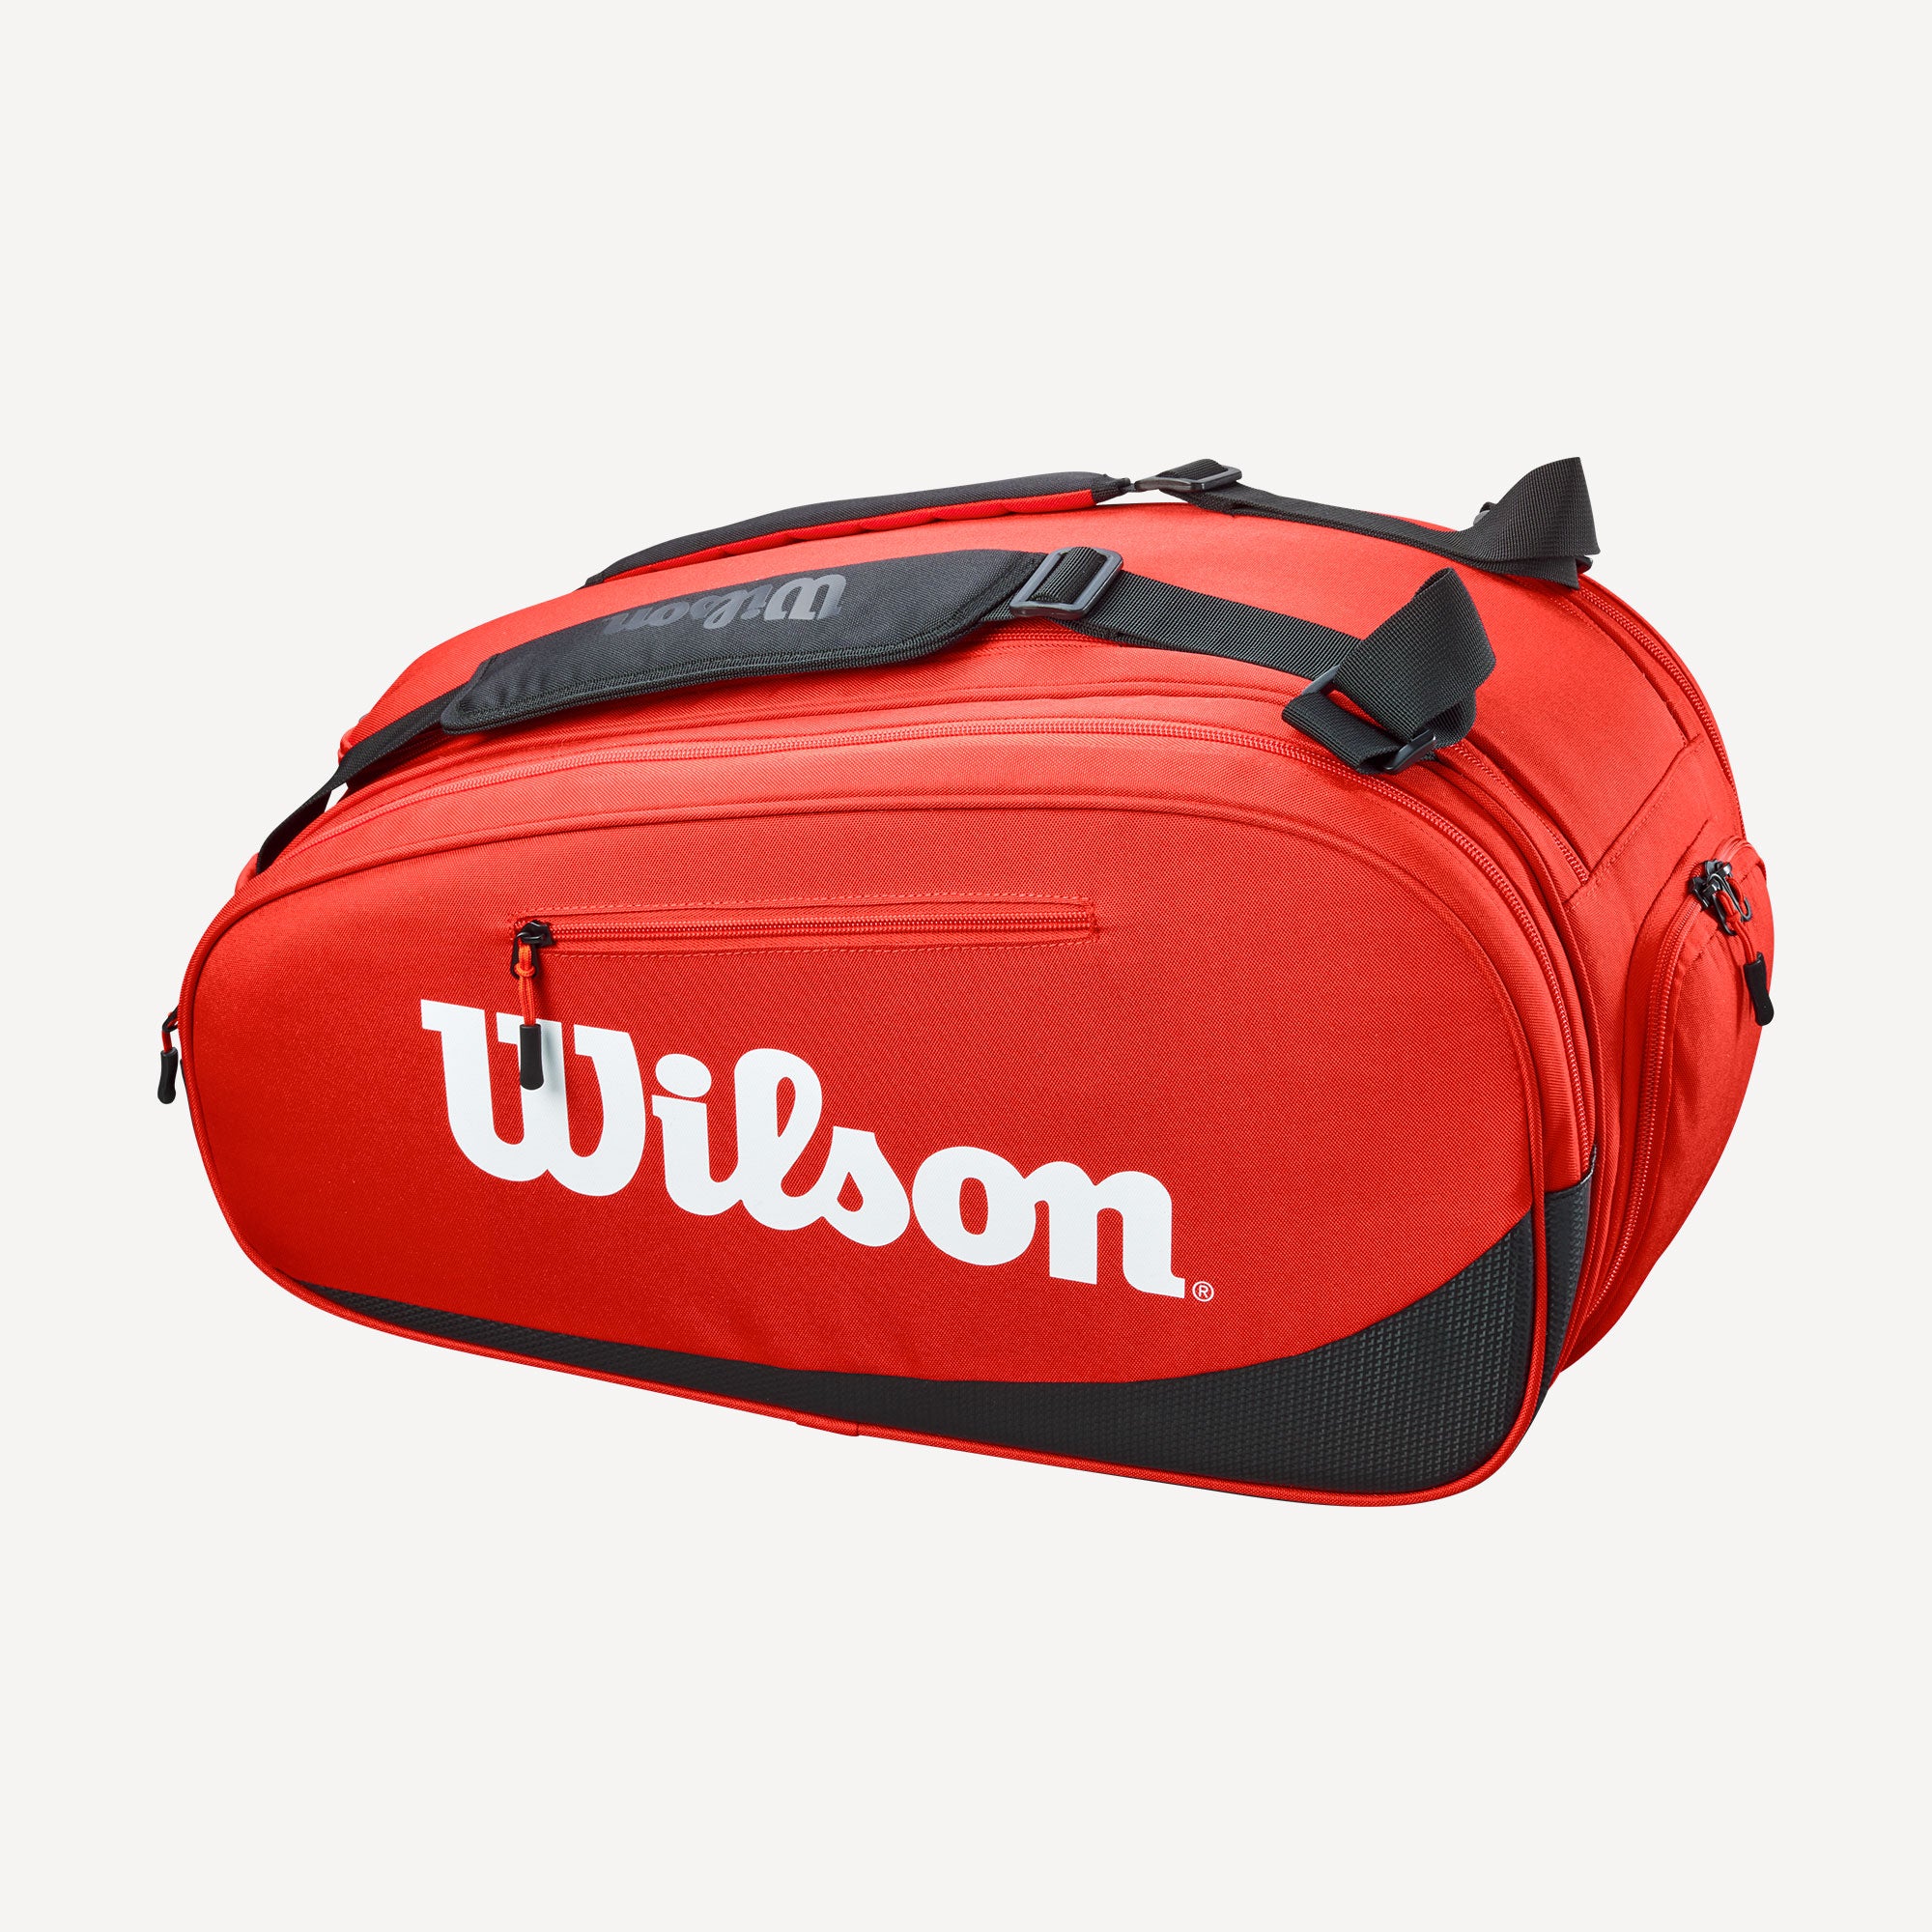 Wilson Tour Padel Bag - Red (2)